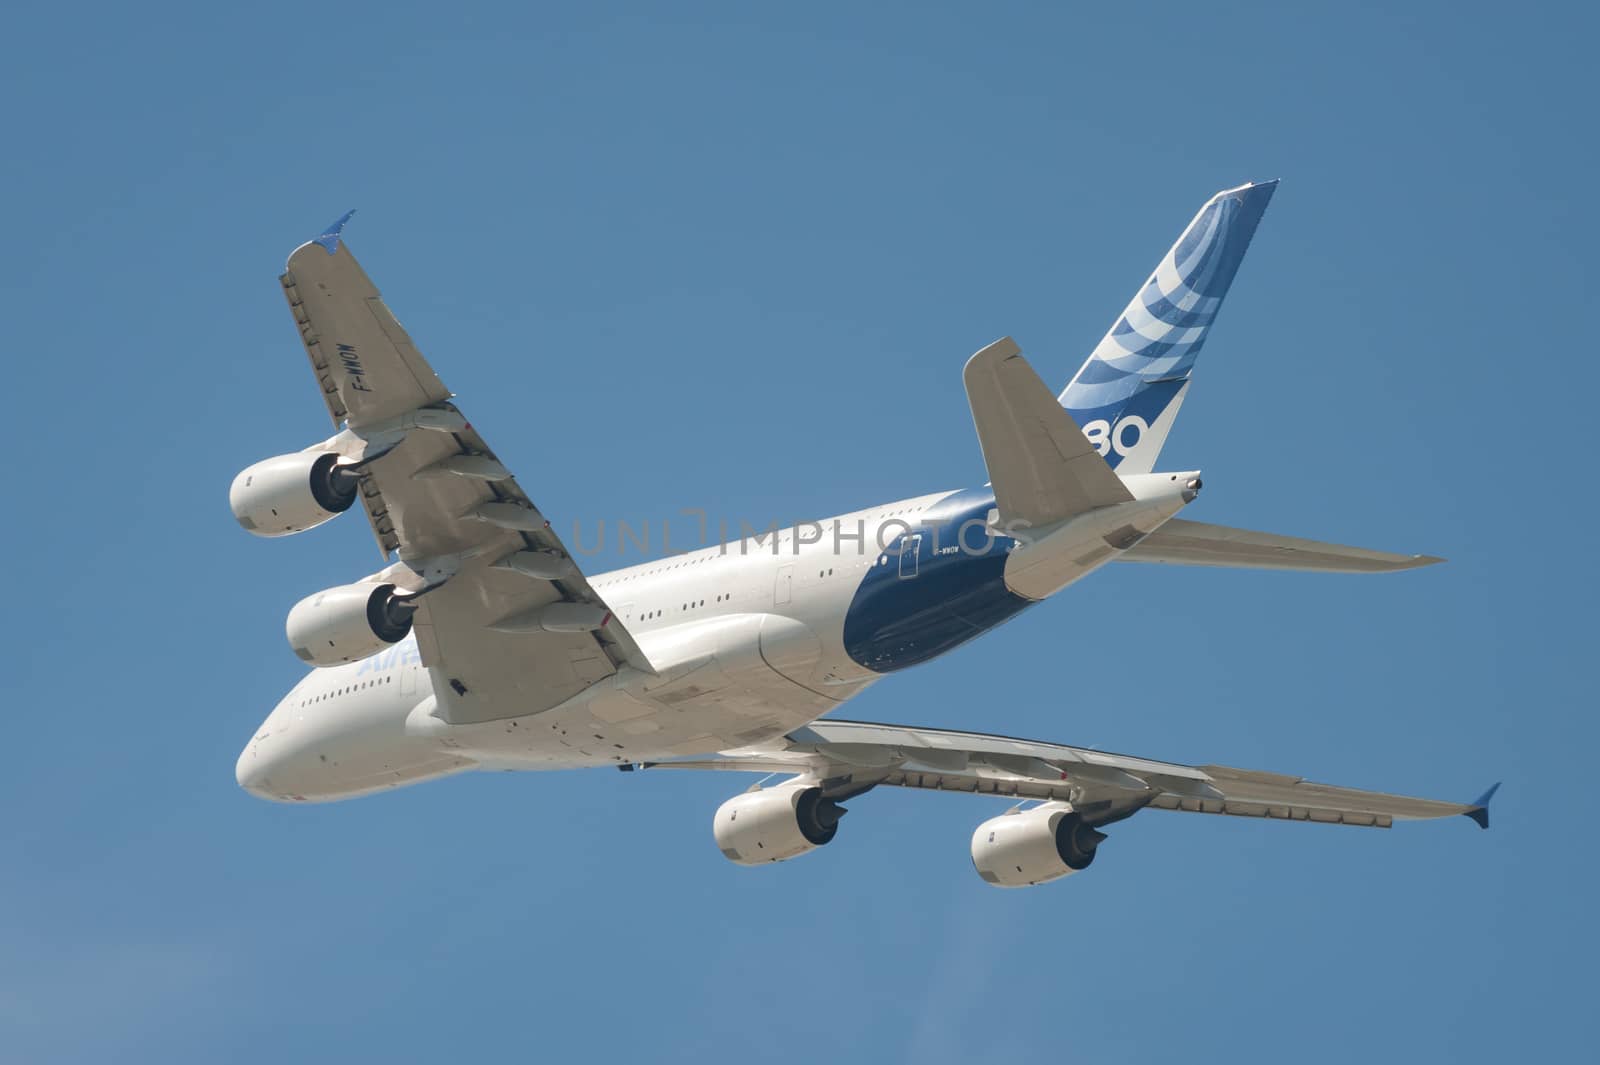 Airbus A380 in flight by nelsonart